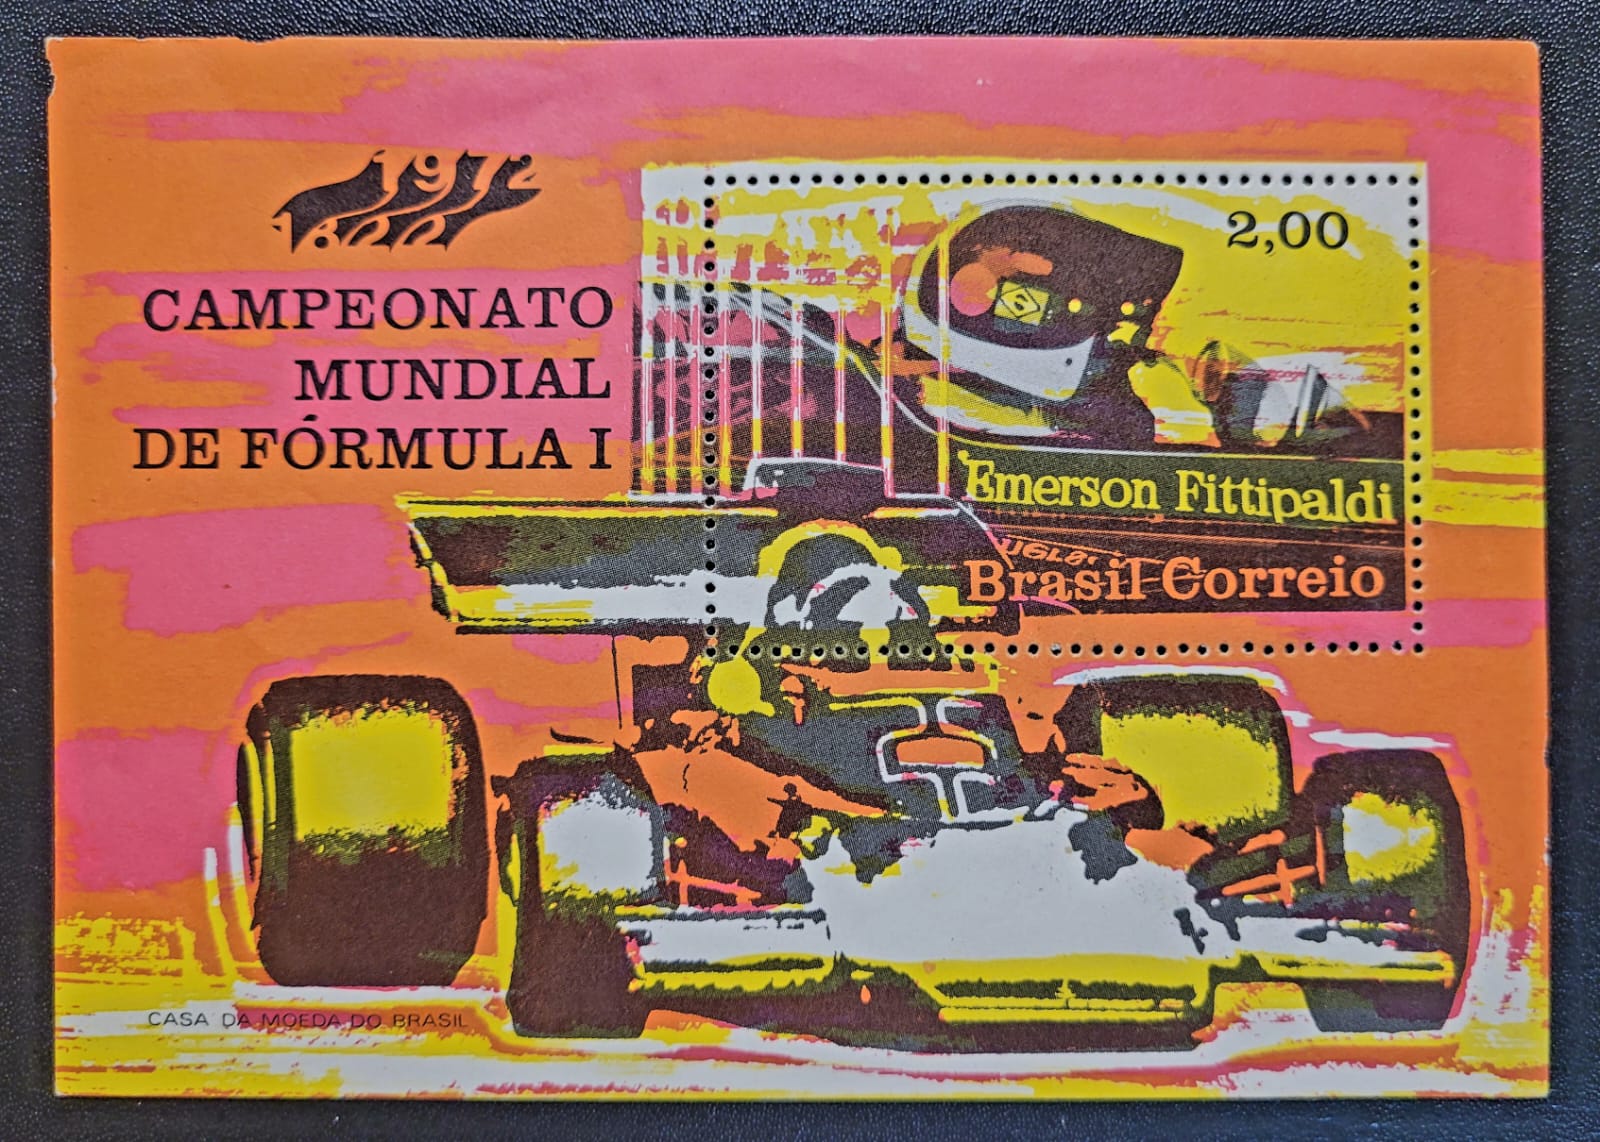 Bloco Comemorativo RHM B033 Novo Campeao Mundial de Formula 1 de 1972 1 Casa do Colecionador